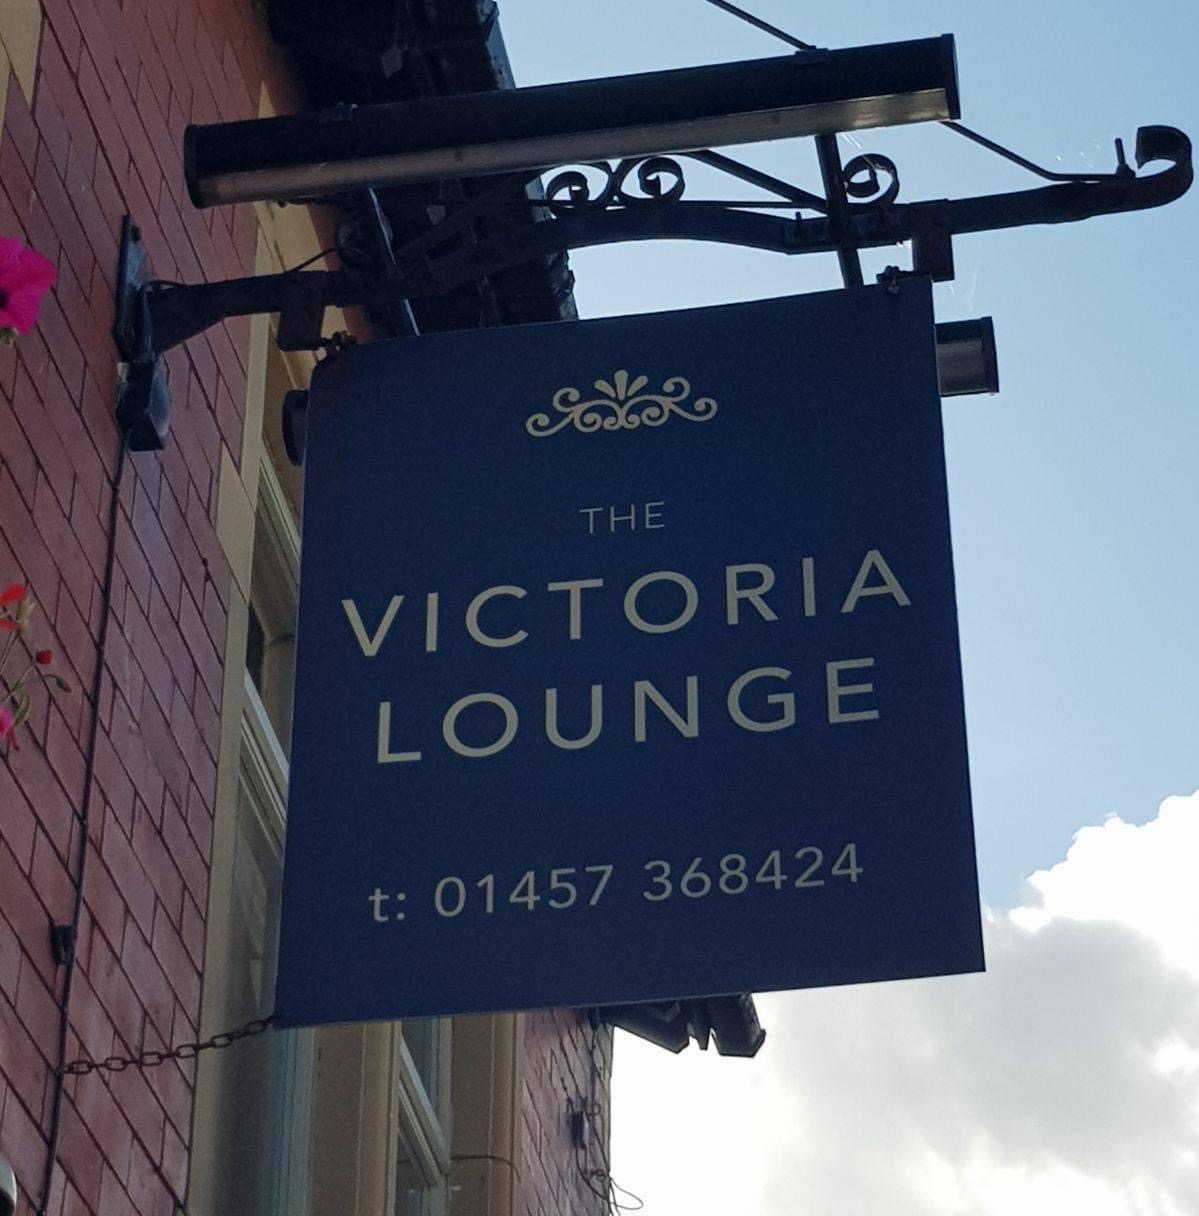 The Glossop Hop pub and bar crawl - Victoria Lounge